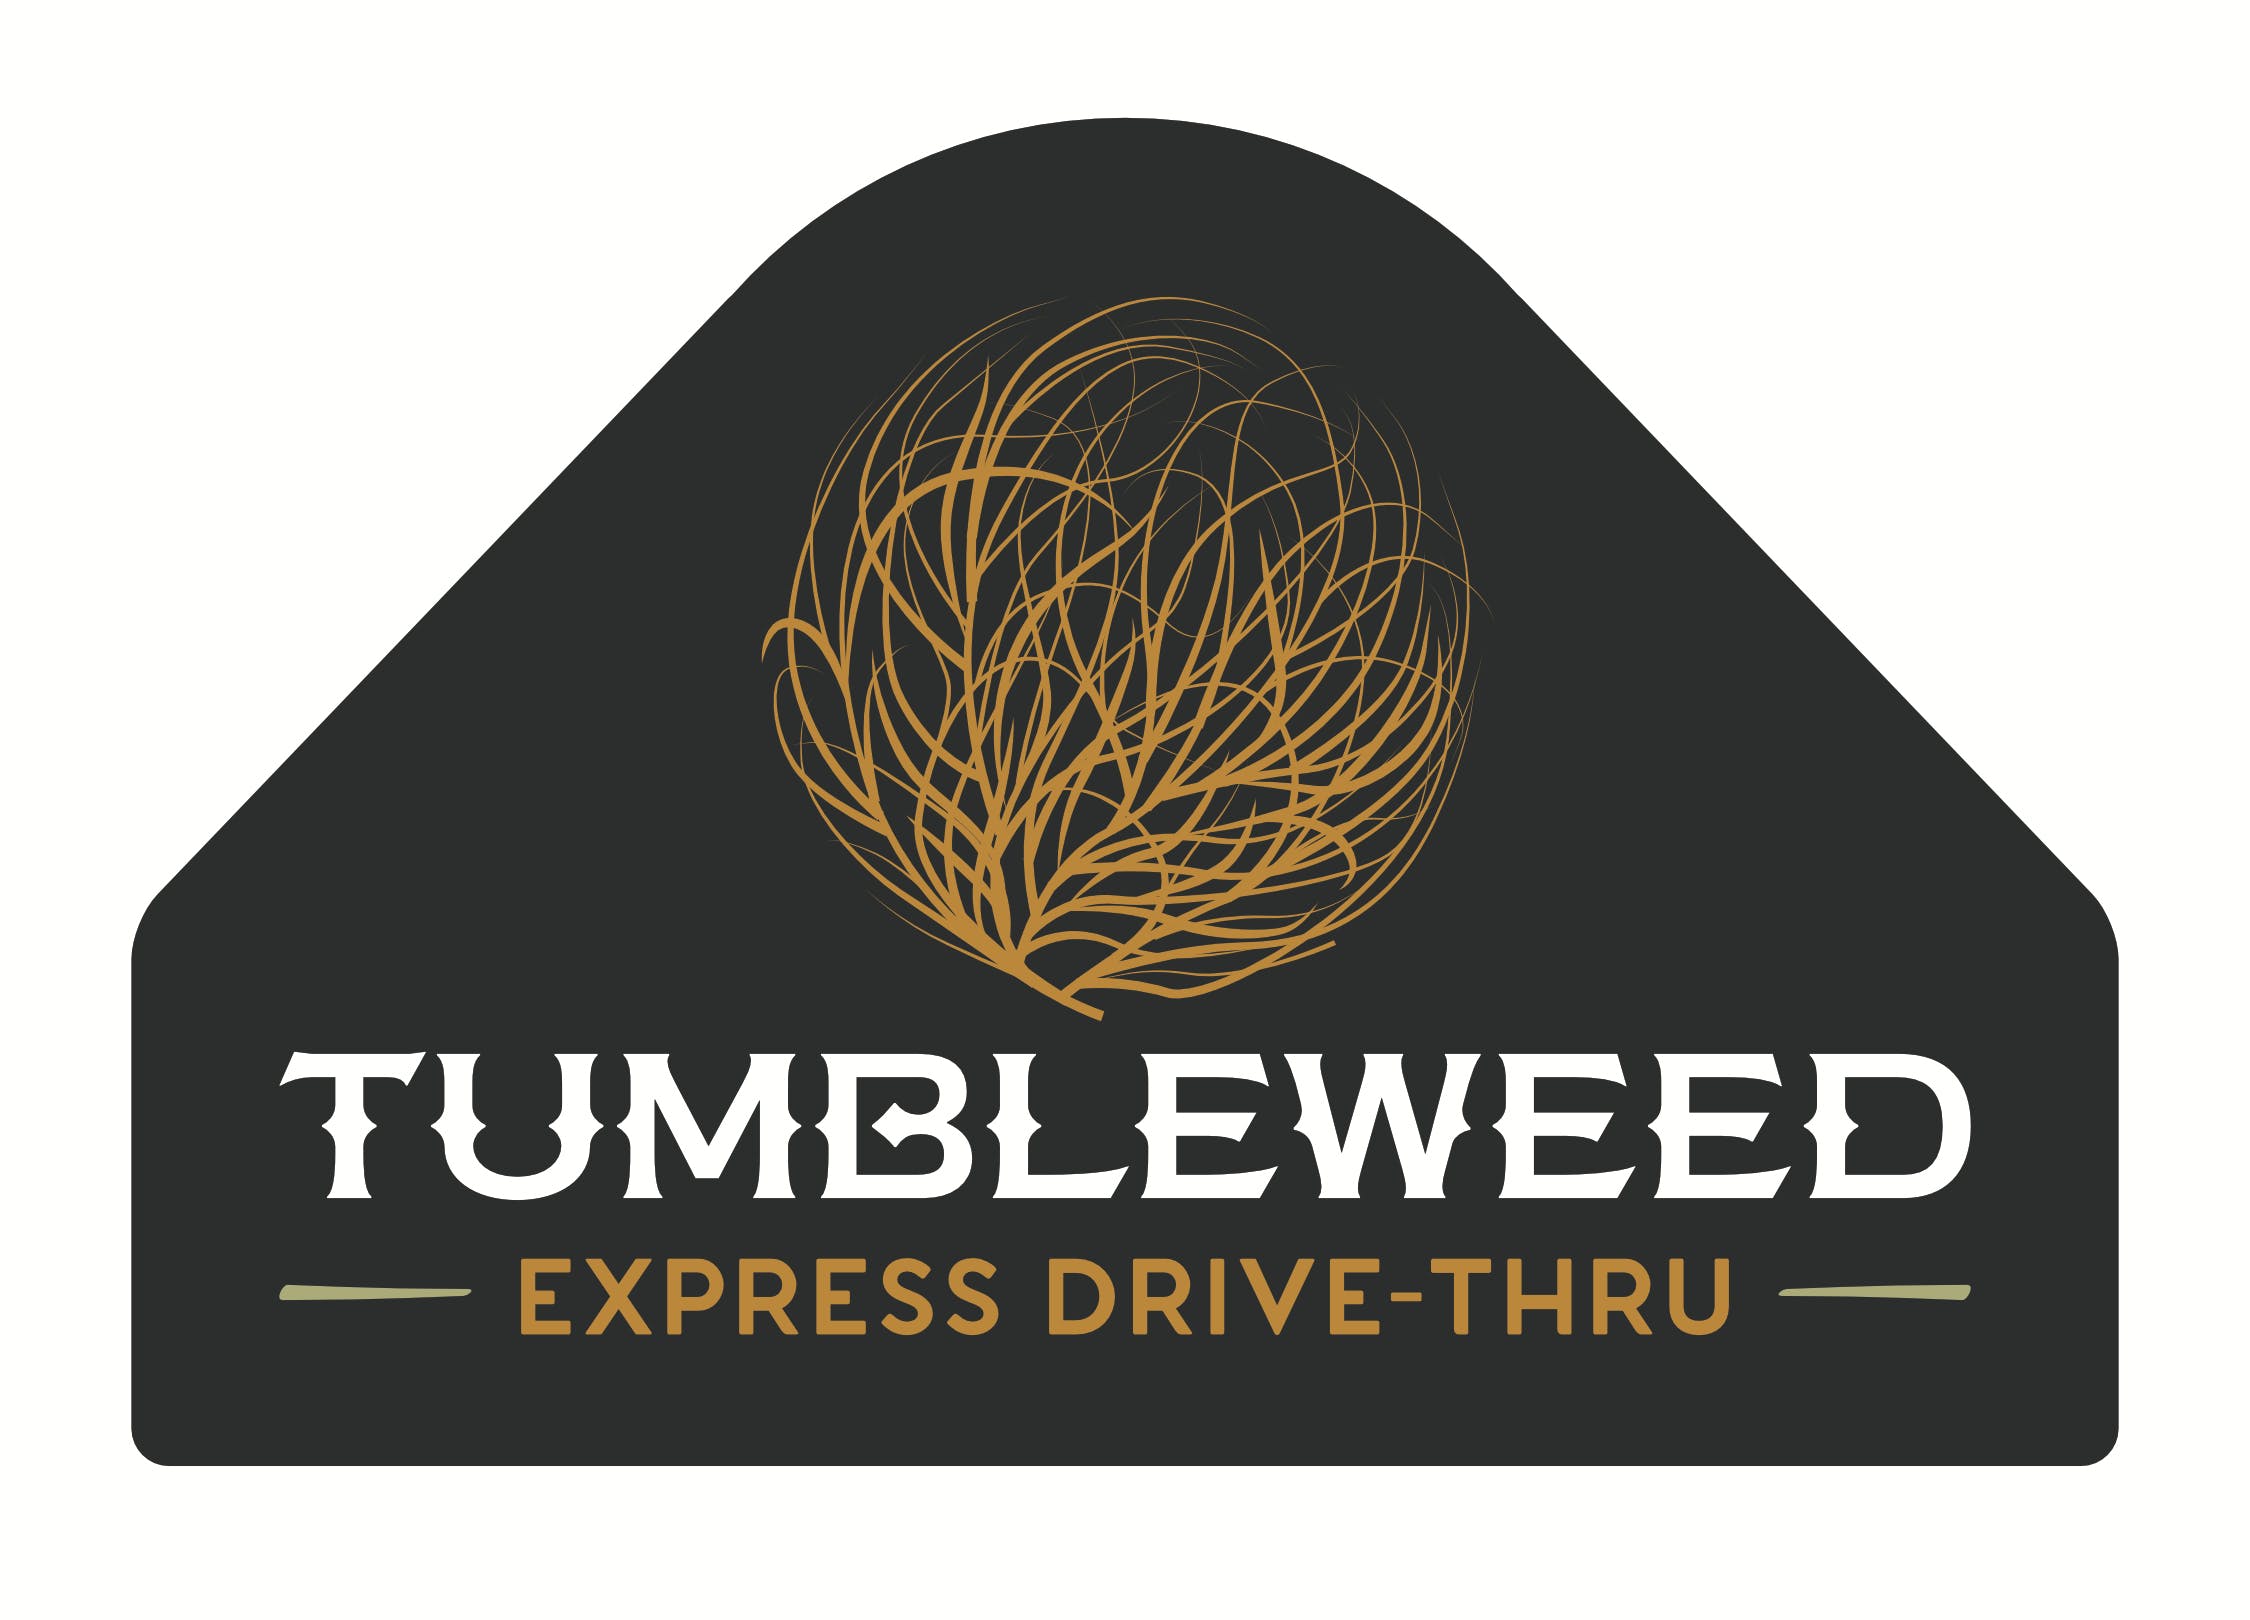 Tumbleweed - Express Drive-thru - Medical Marijuana Doctors - Cannabizme.com